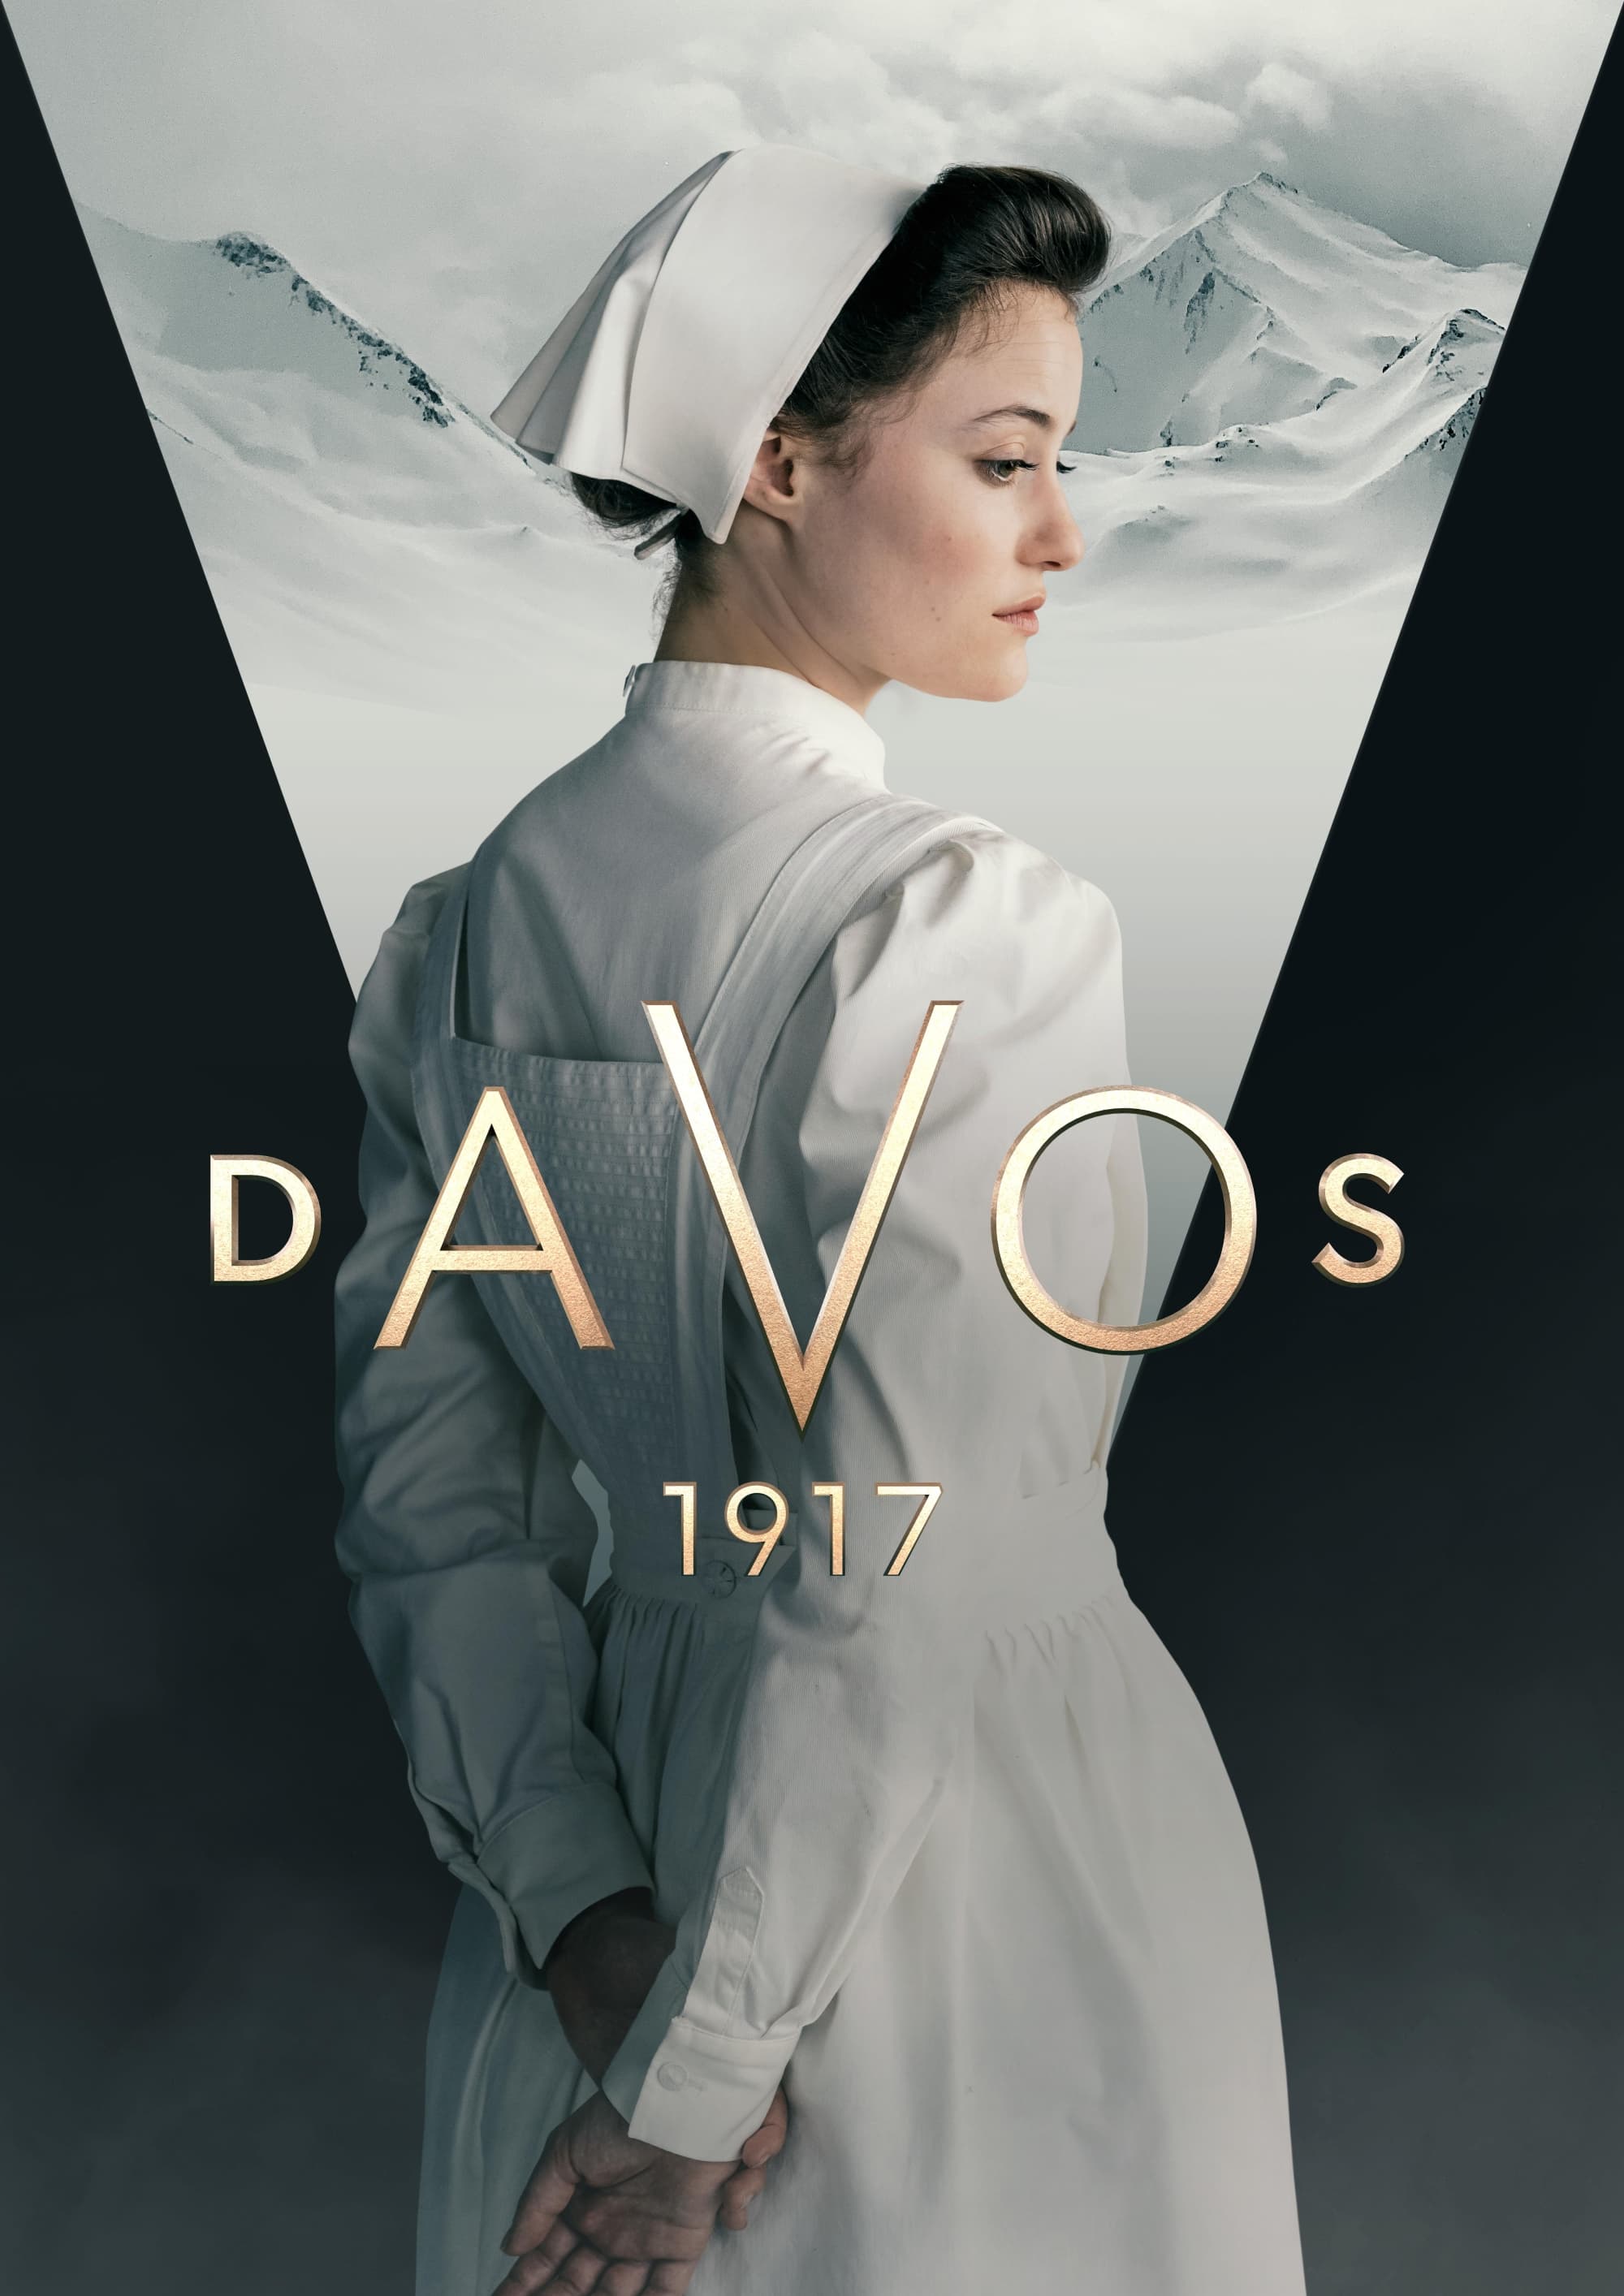 Caratula de Davos 1917 (Davos 1917) 